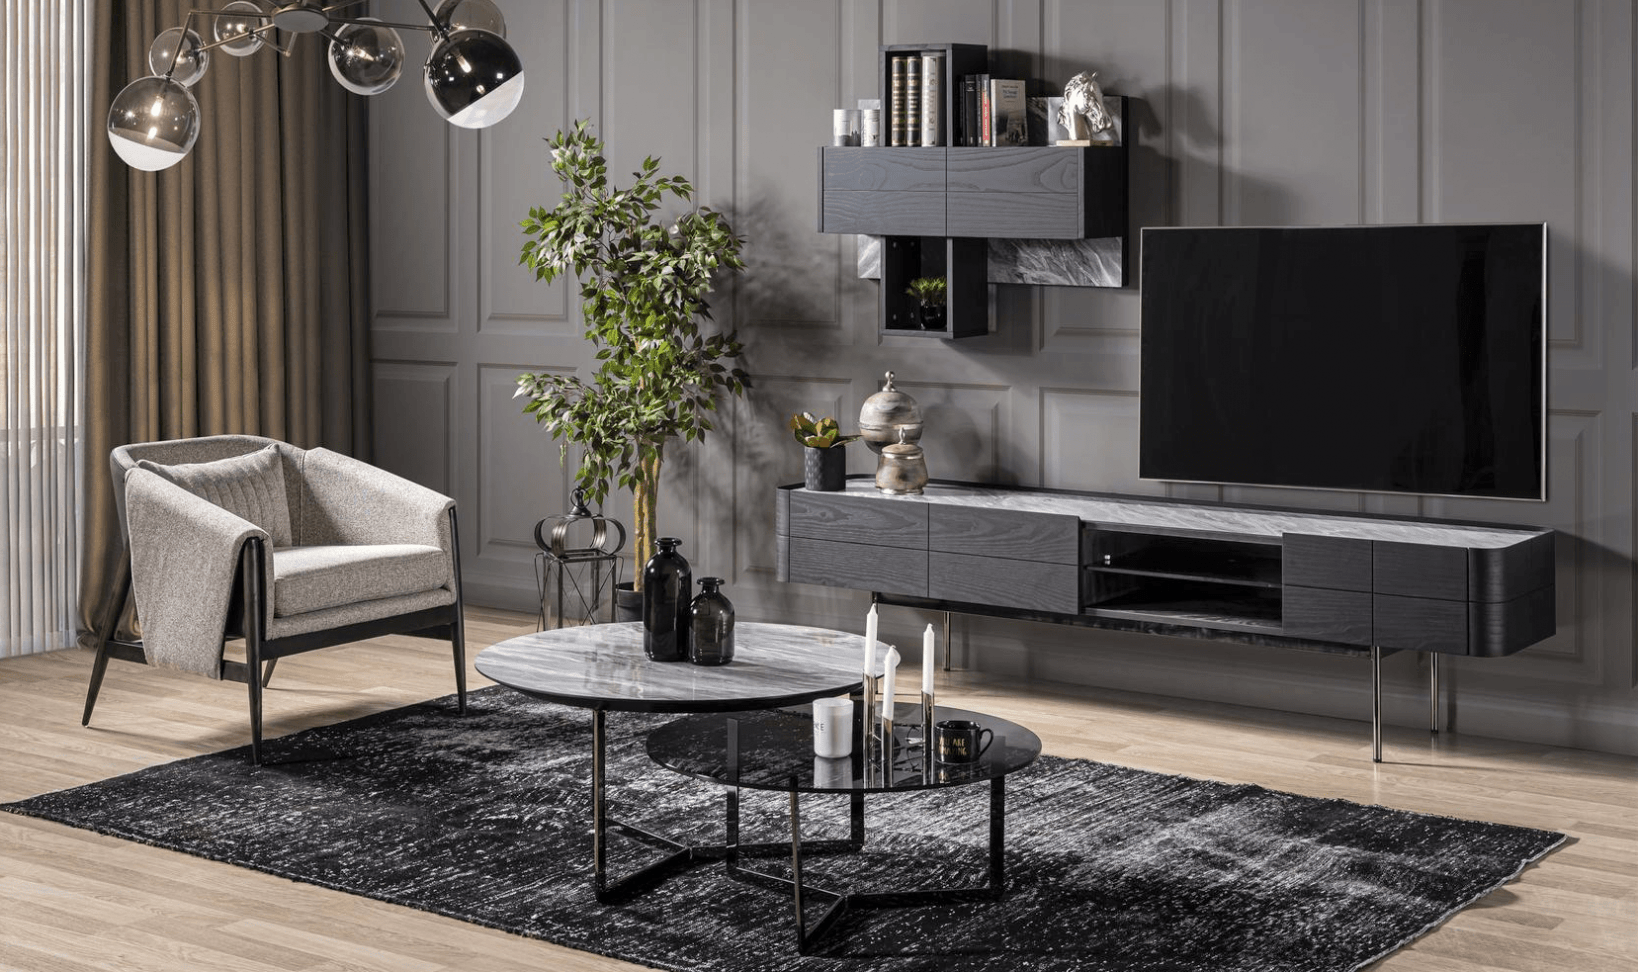 AIDA TV UNIT COFFEE TABLE AND BERGER - Exclusive design bútorok